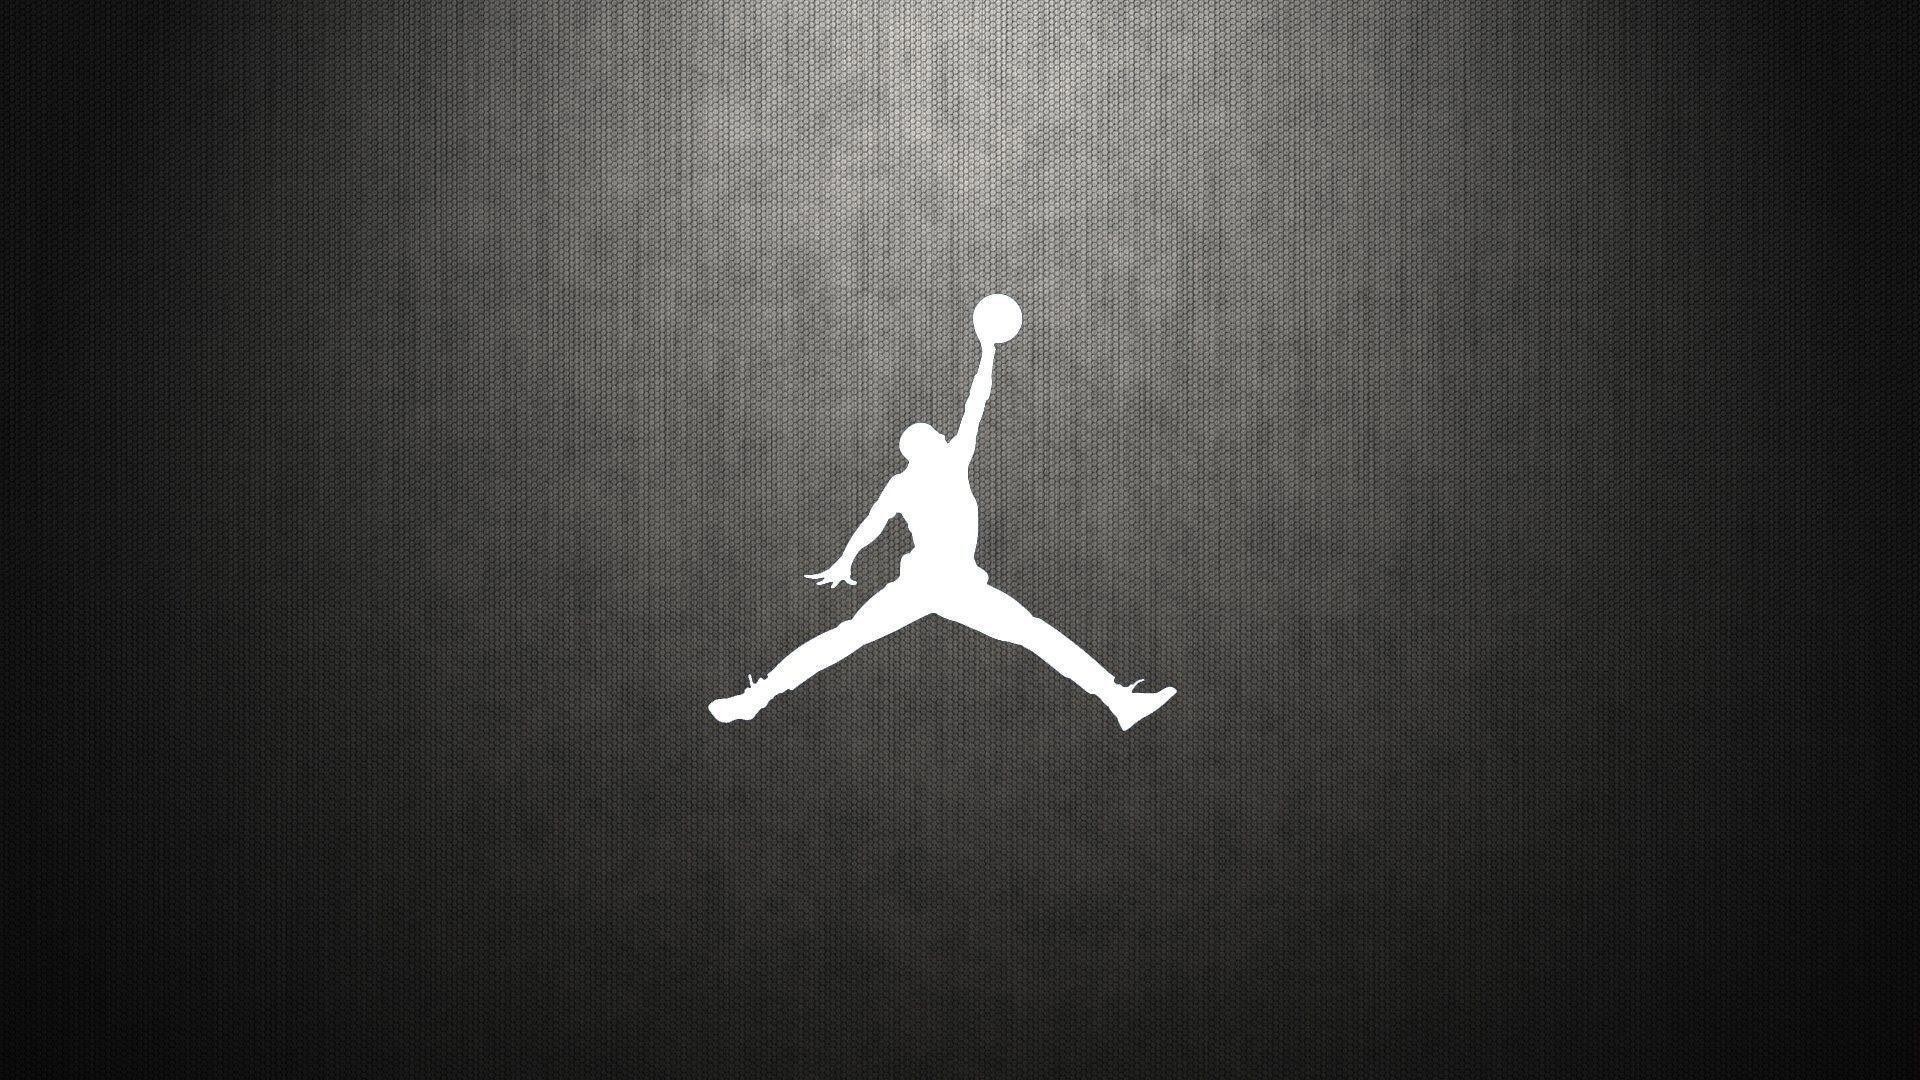 Jumpman Logo, Nike wallpaper, Sports brand, Sneaker culture, 1920x1080 Full HD Desktop